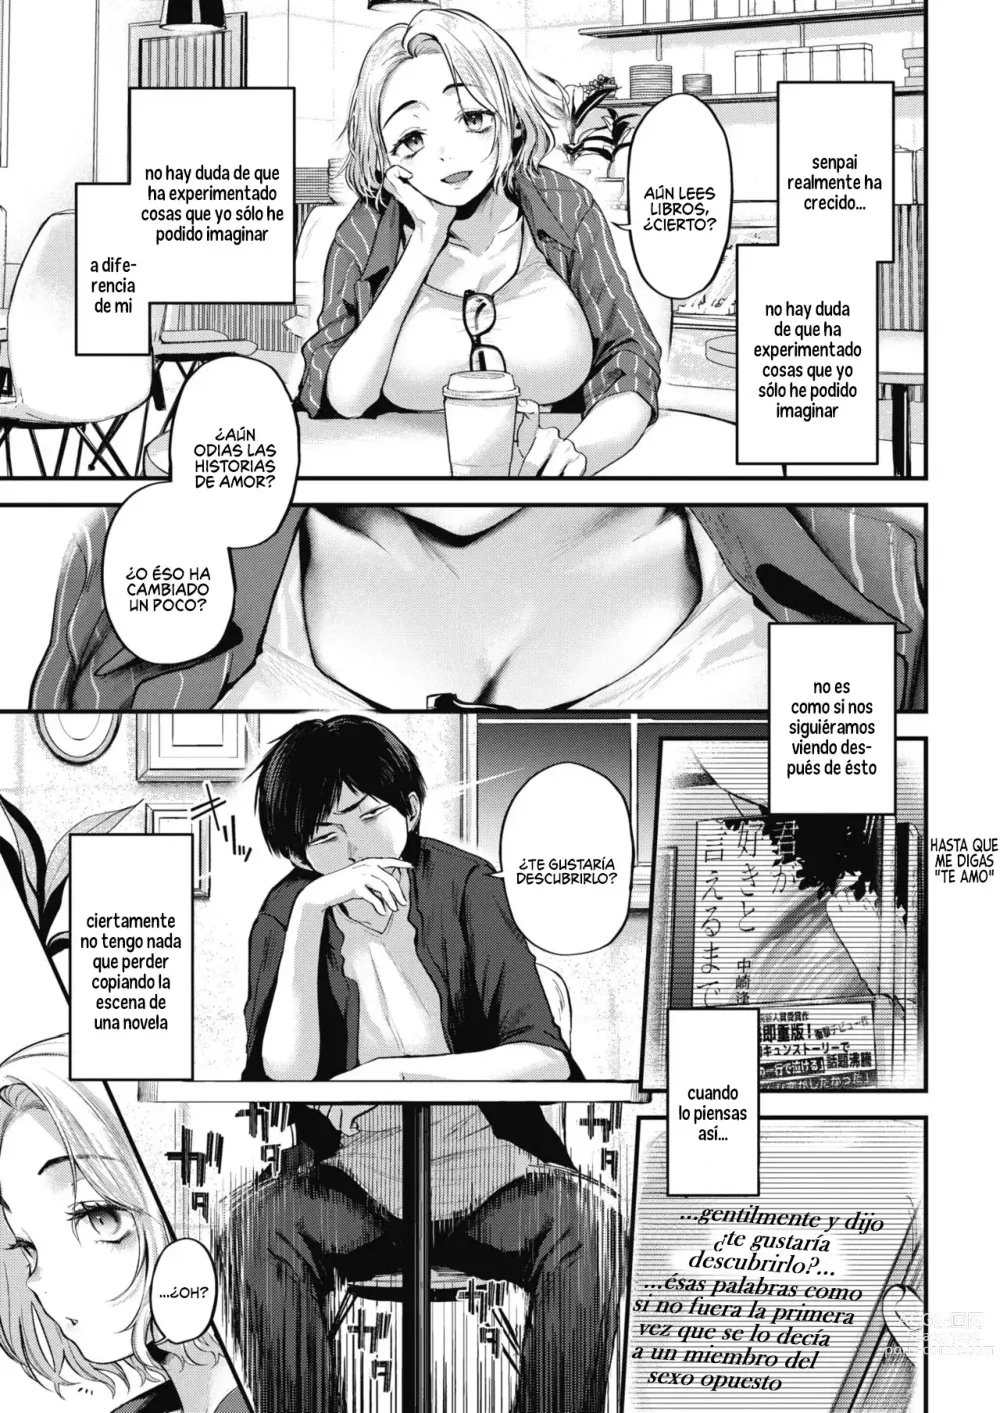 Page 7 of manga Reencuentro nada fortuito